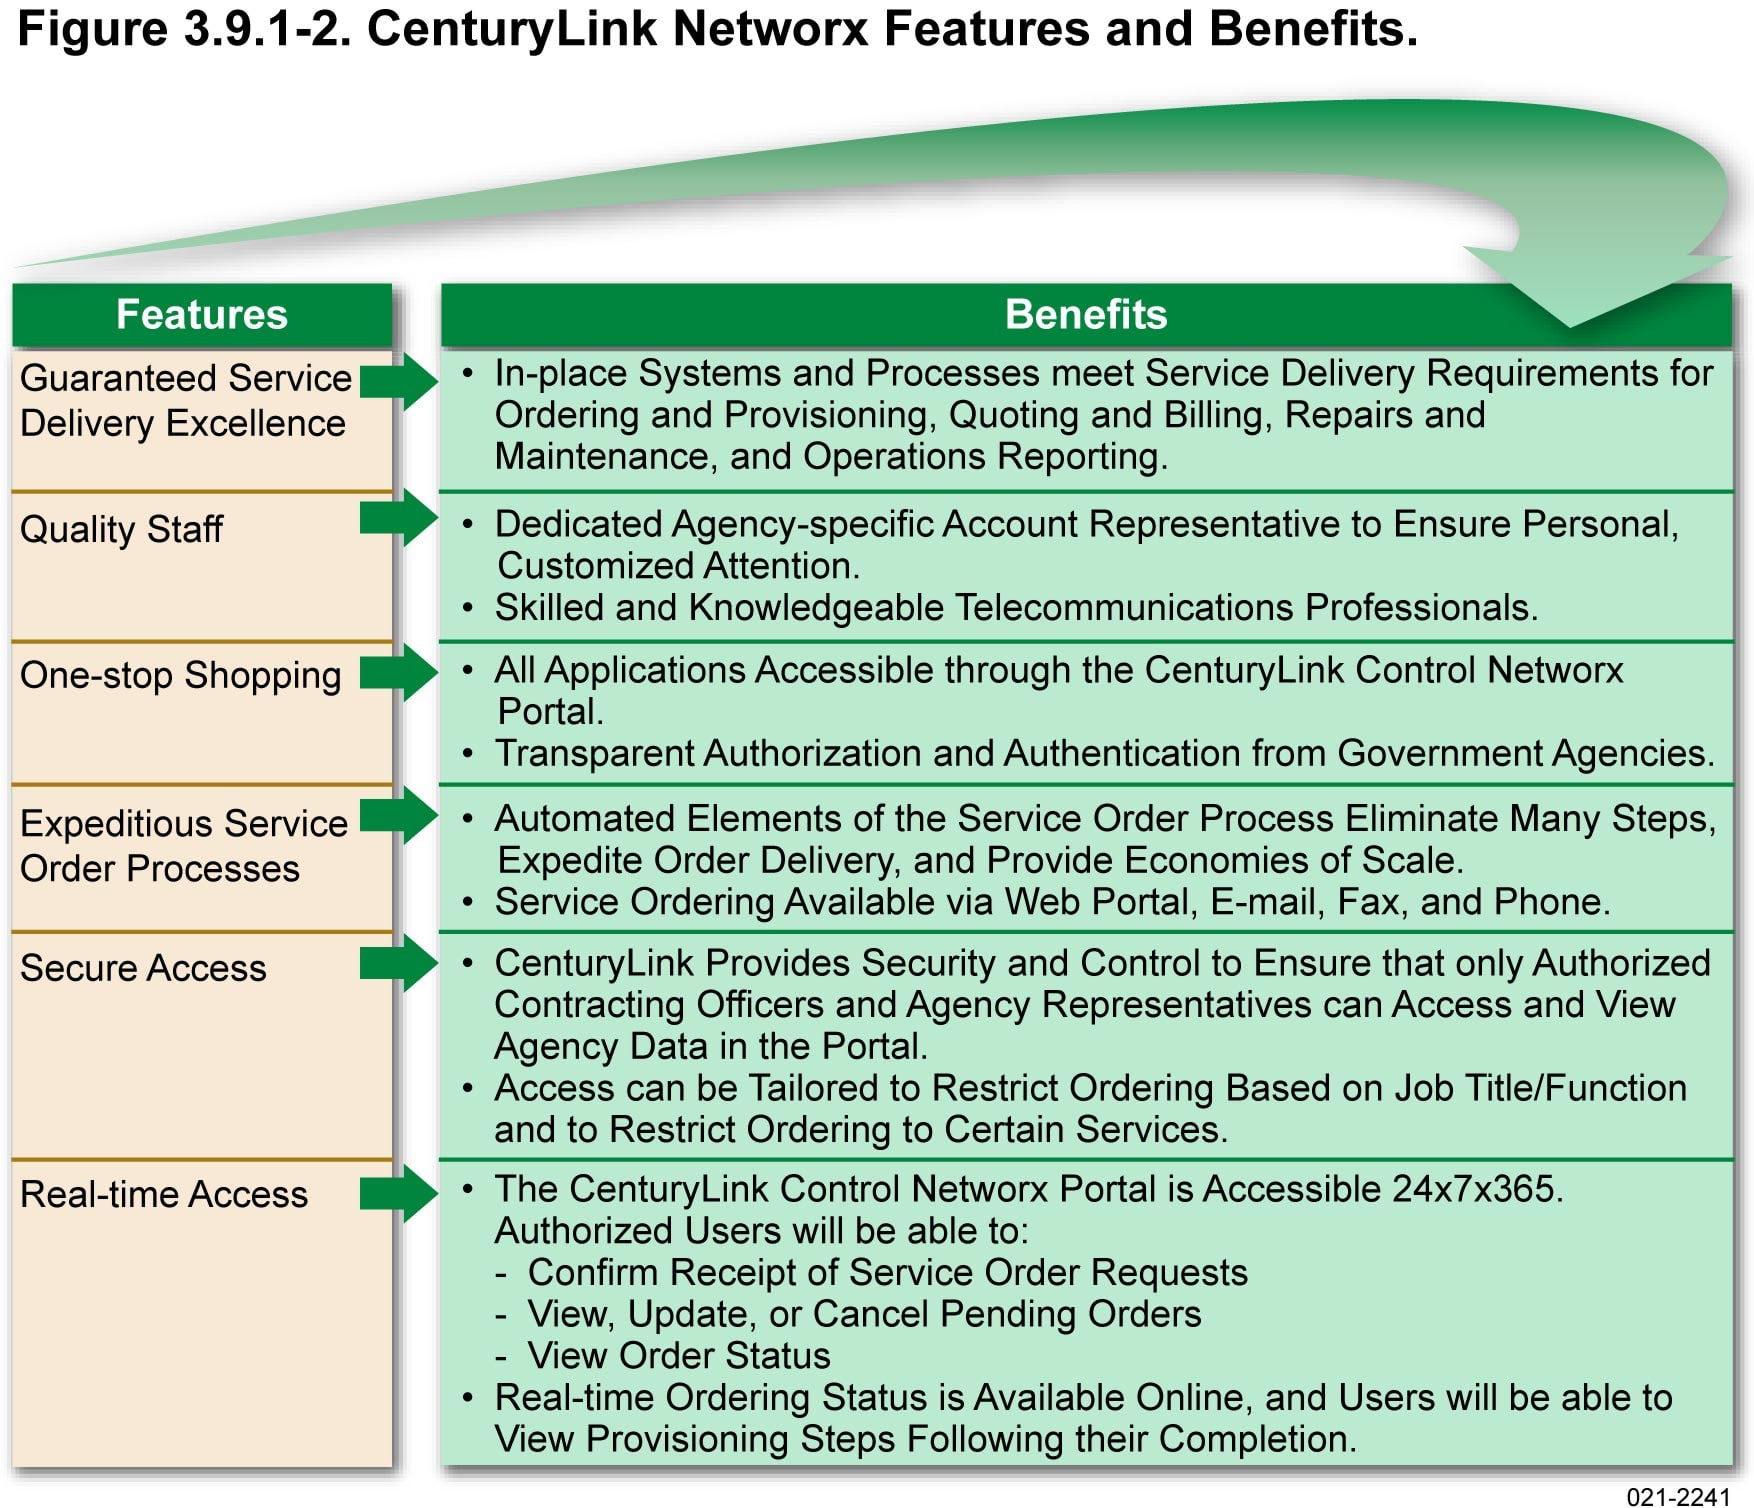 CenturyLink Networx Features and Benefits